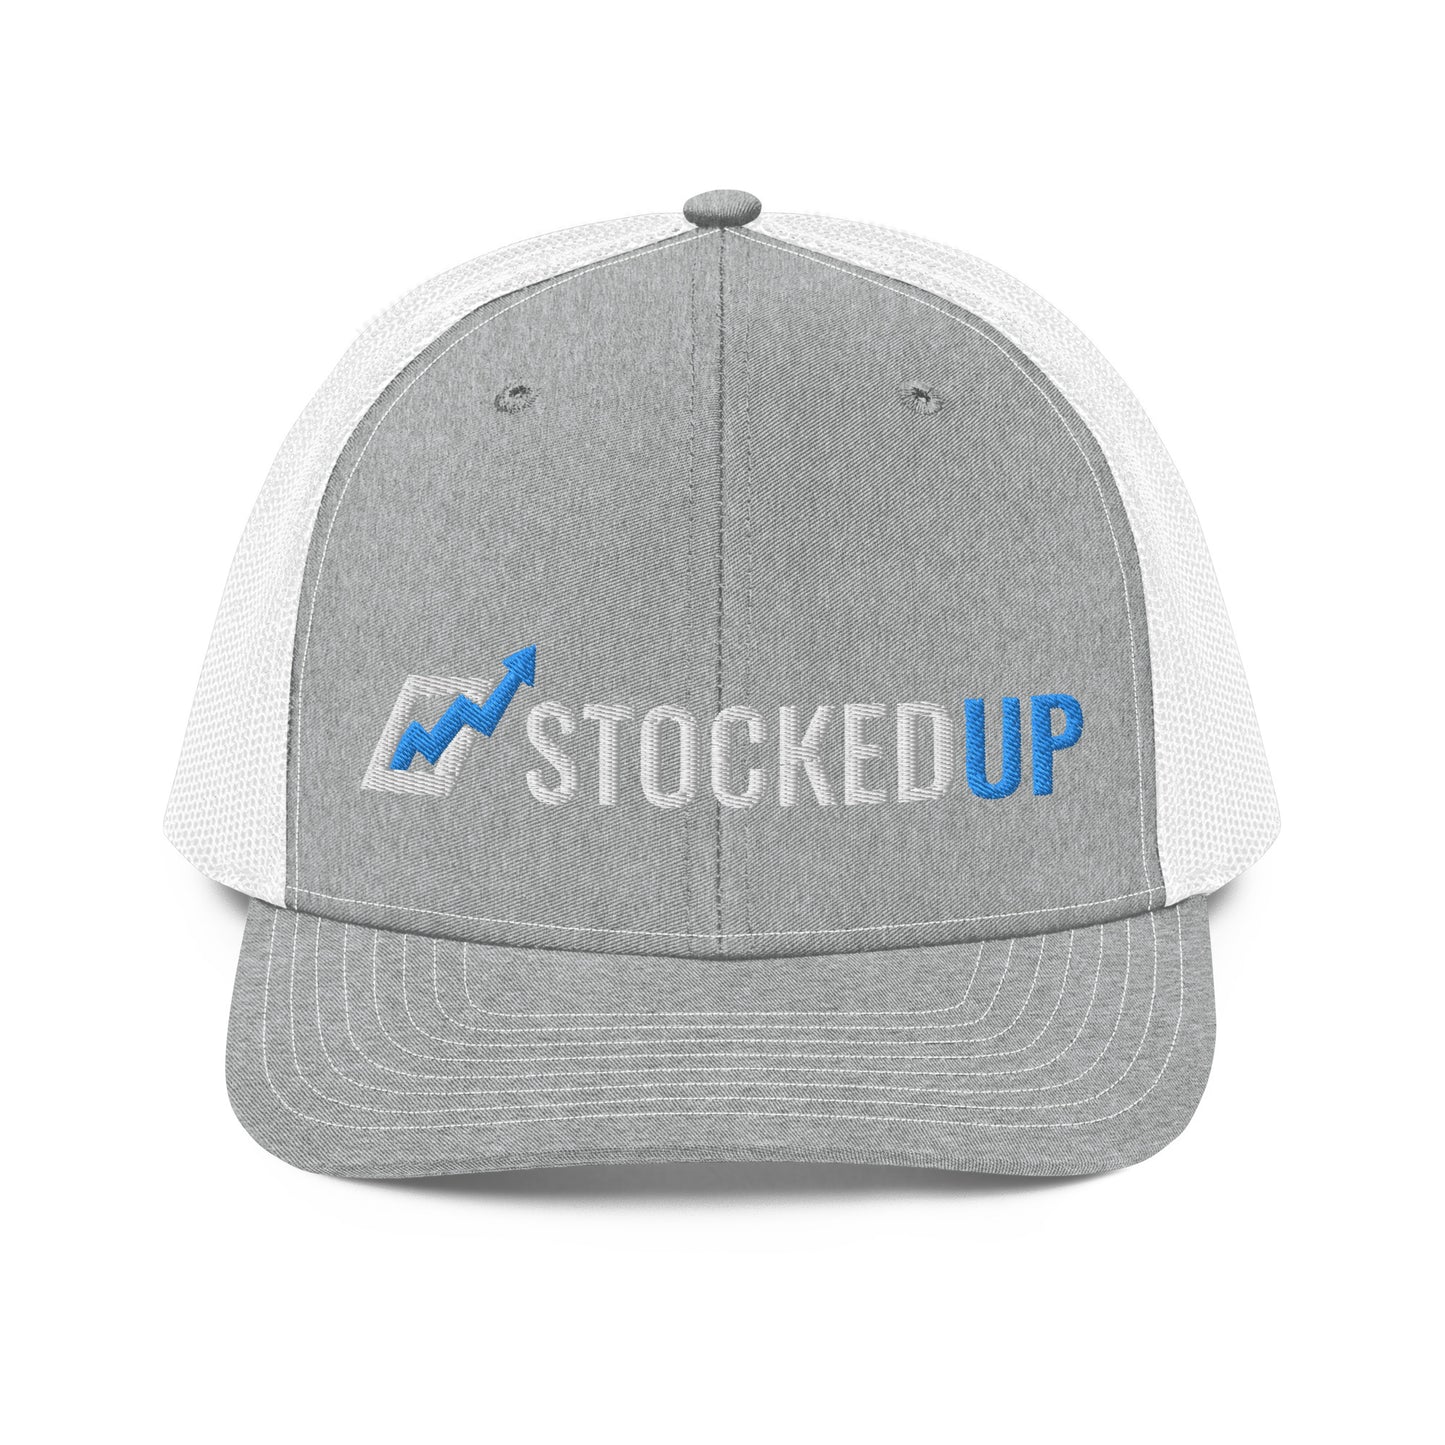 StockedUp Trucker Snapback (Grey/White)